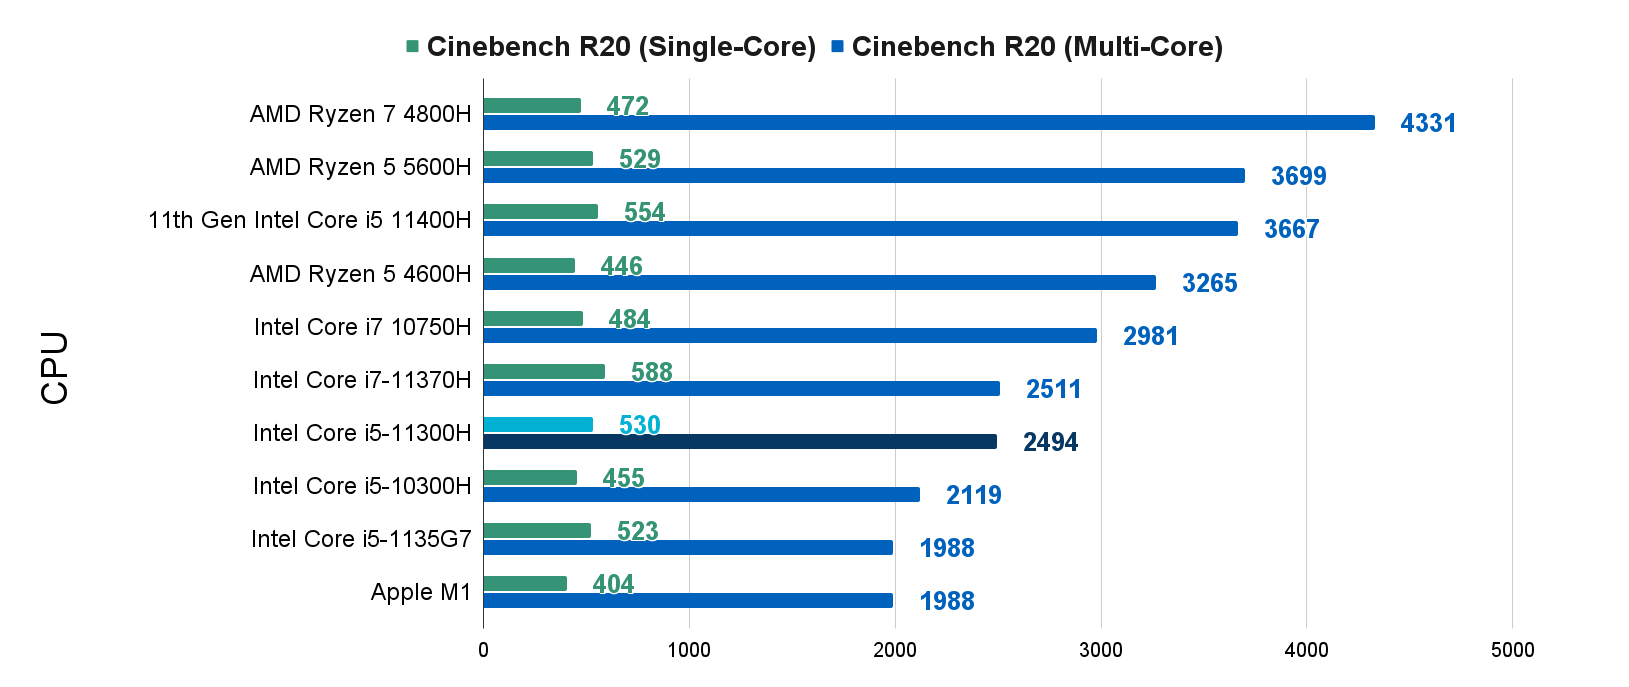 11th Gen Intel Core i5 11300H Cinebench R20 Benchmark